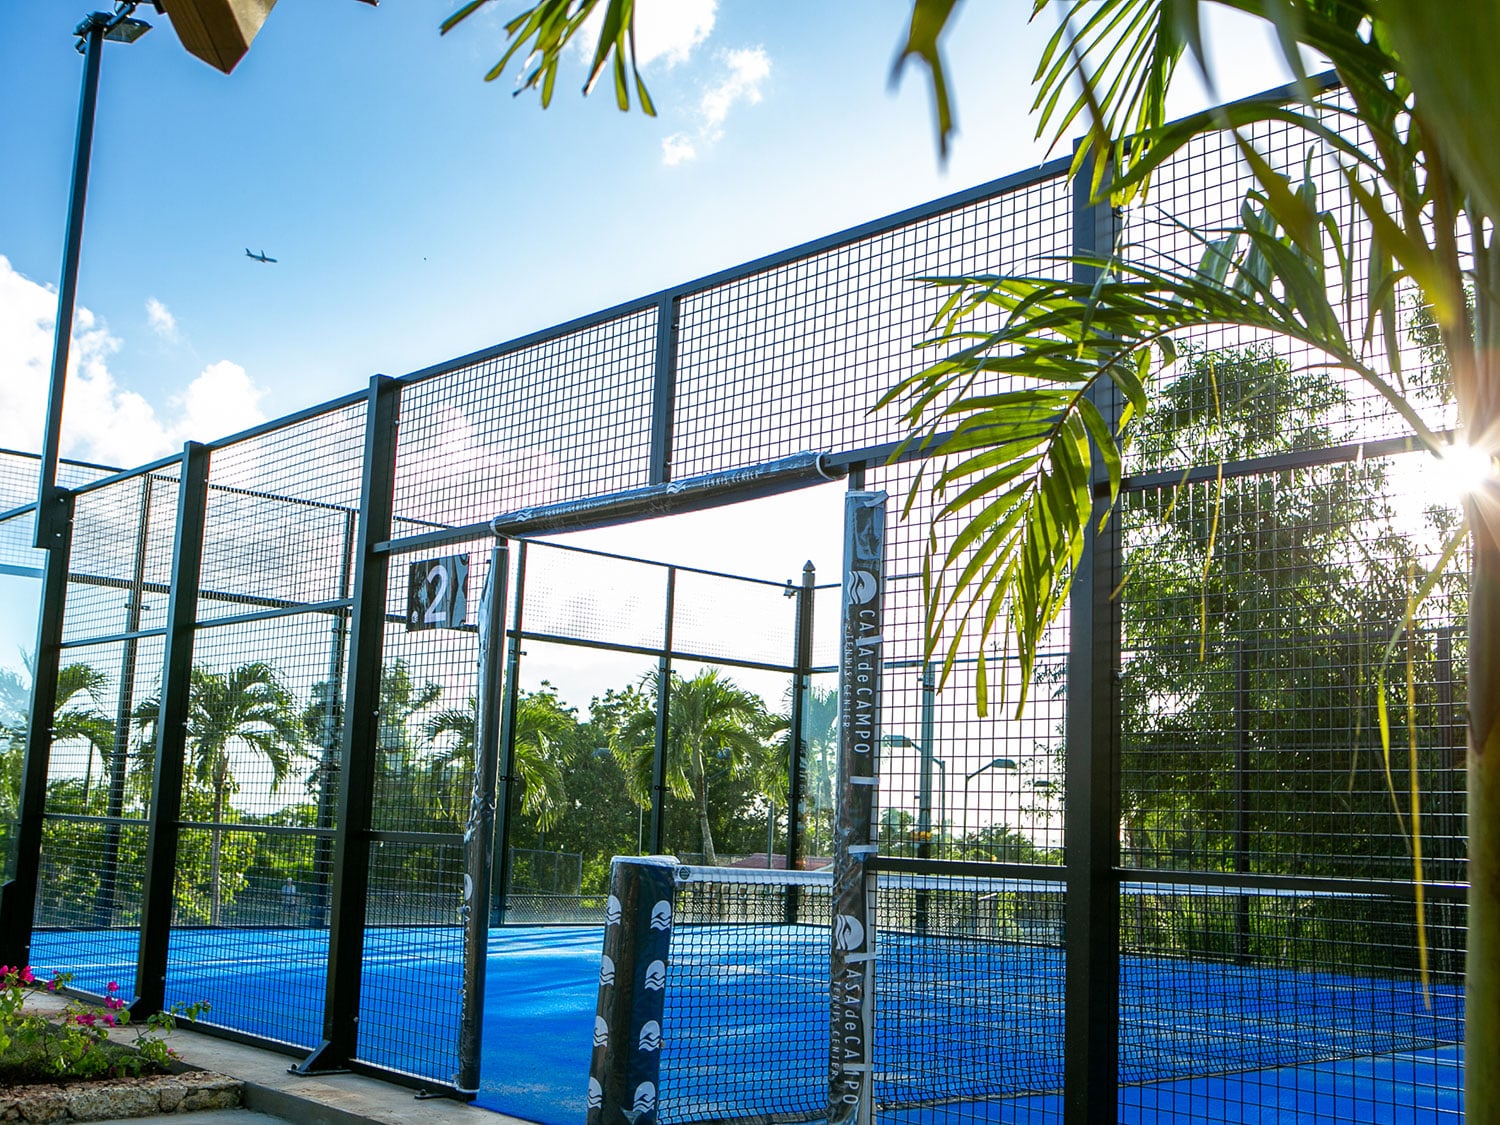 The tennis courts at Casa de Campo Resort and Villas in the Dominican Republic.